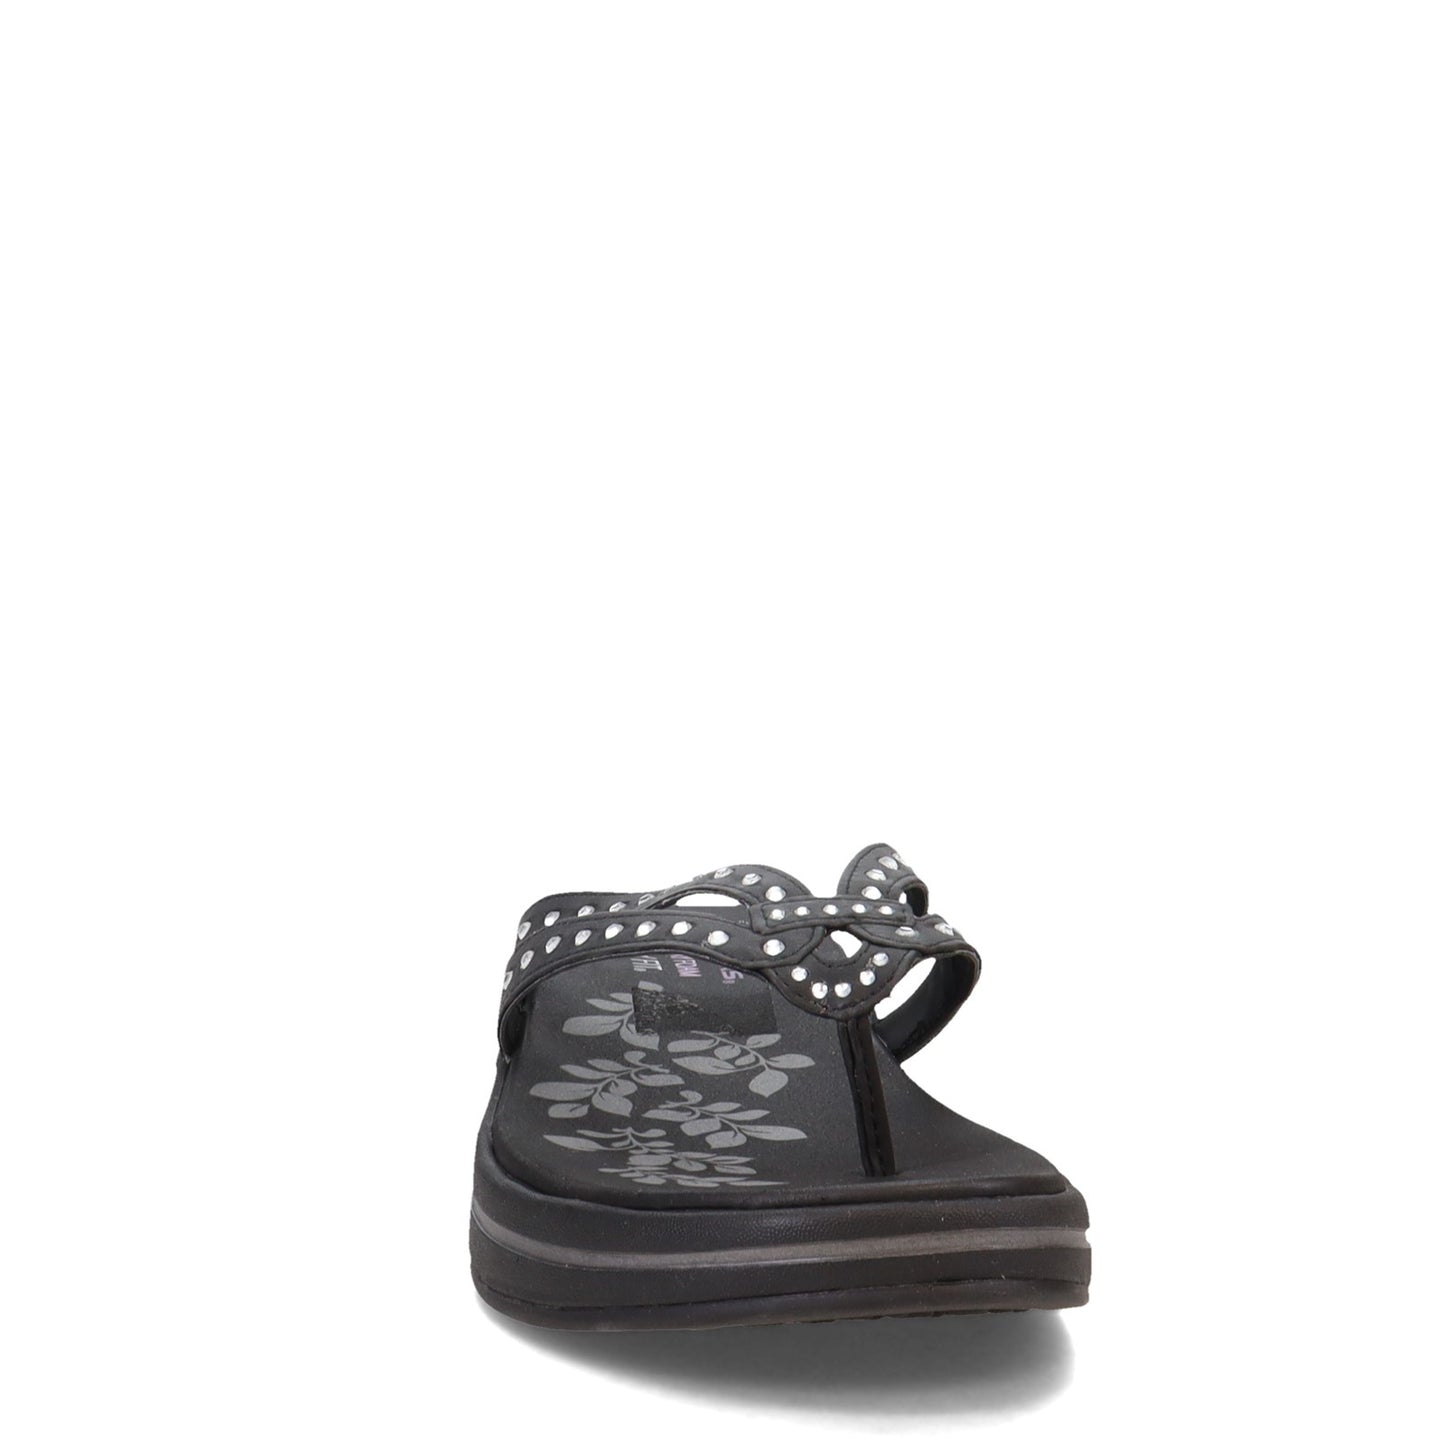 Peltz Shoes  Women's Skechers Upgrades Be Jeweled Thong Sandals BLACK 40899-BLK